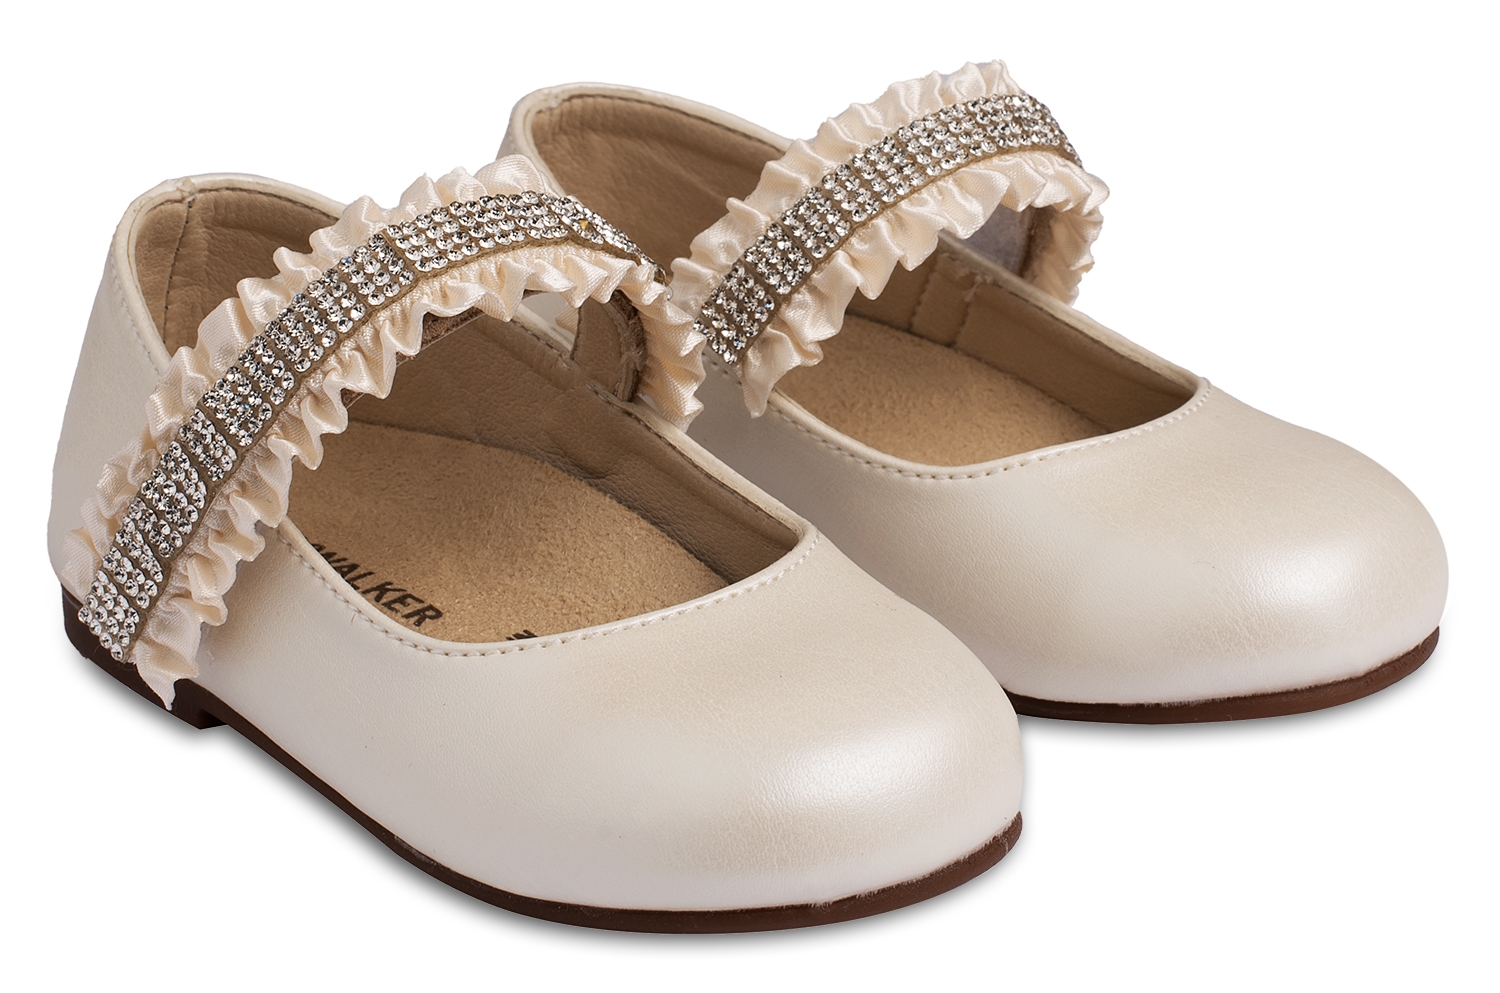 Babywalker Chic Μπαλαρίνα - Βαπτιστικά παπούτσια για κορίτσι